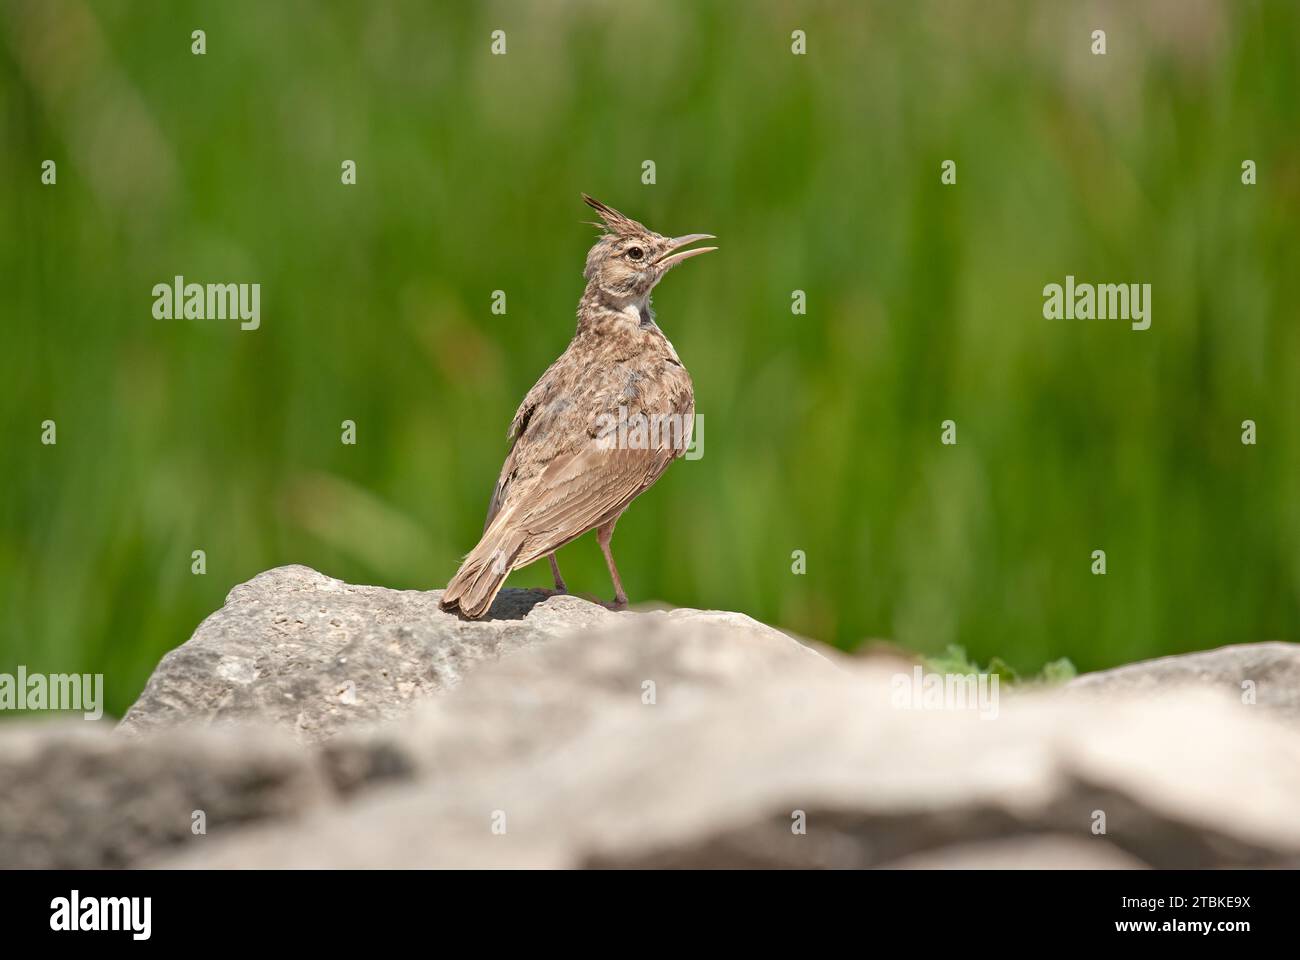 Crested Lark (Galerida cristata) singing on a rock. Green background. Stock Photo